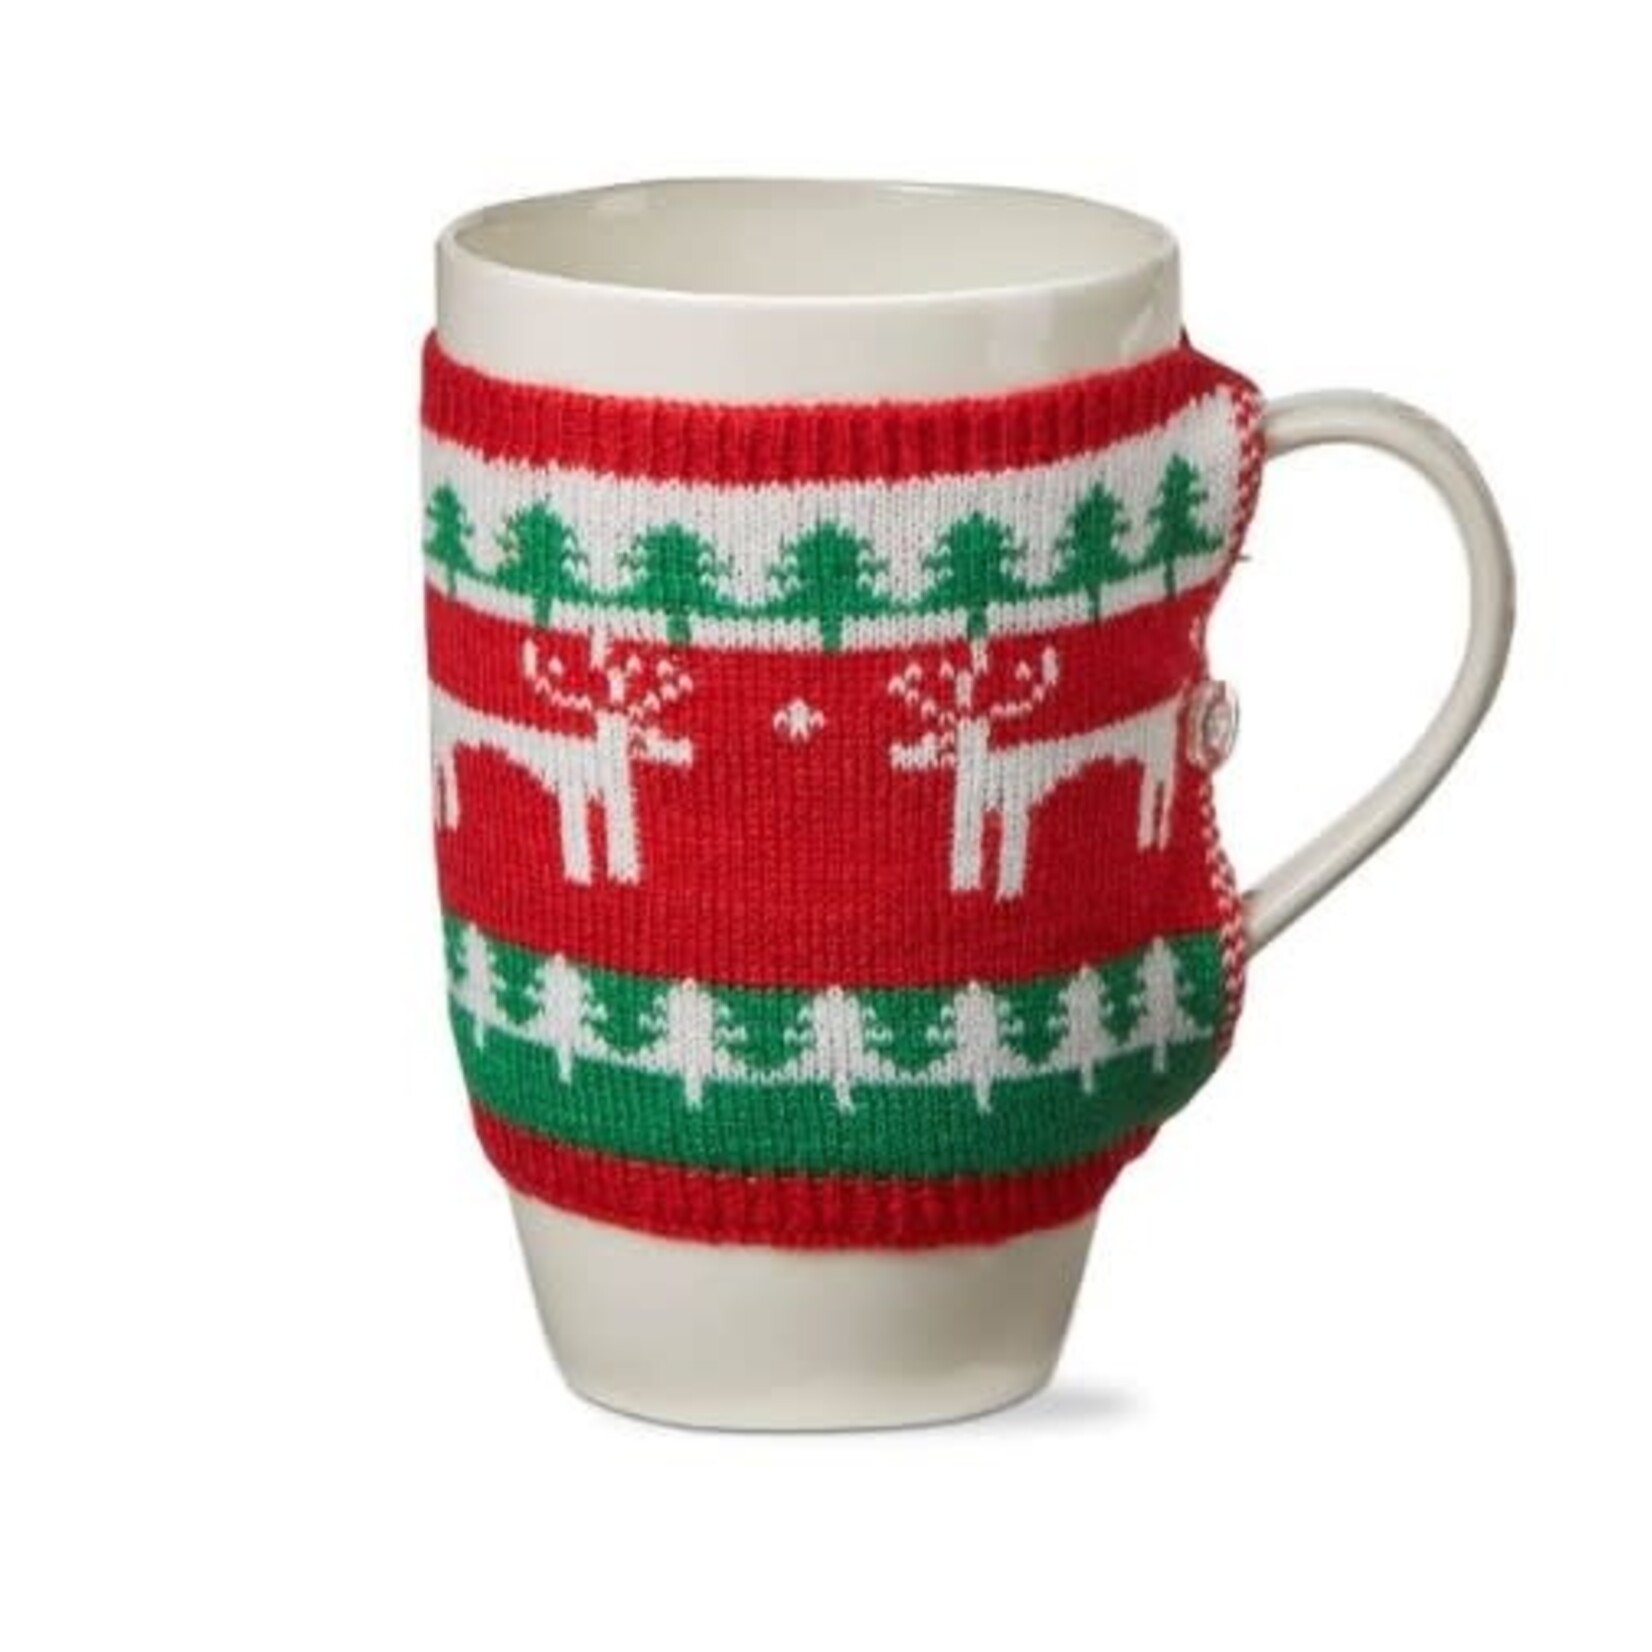 Reindeer Knit Sweater Mug